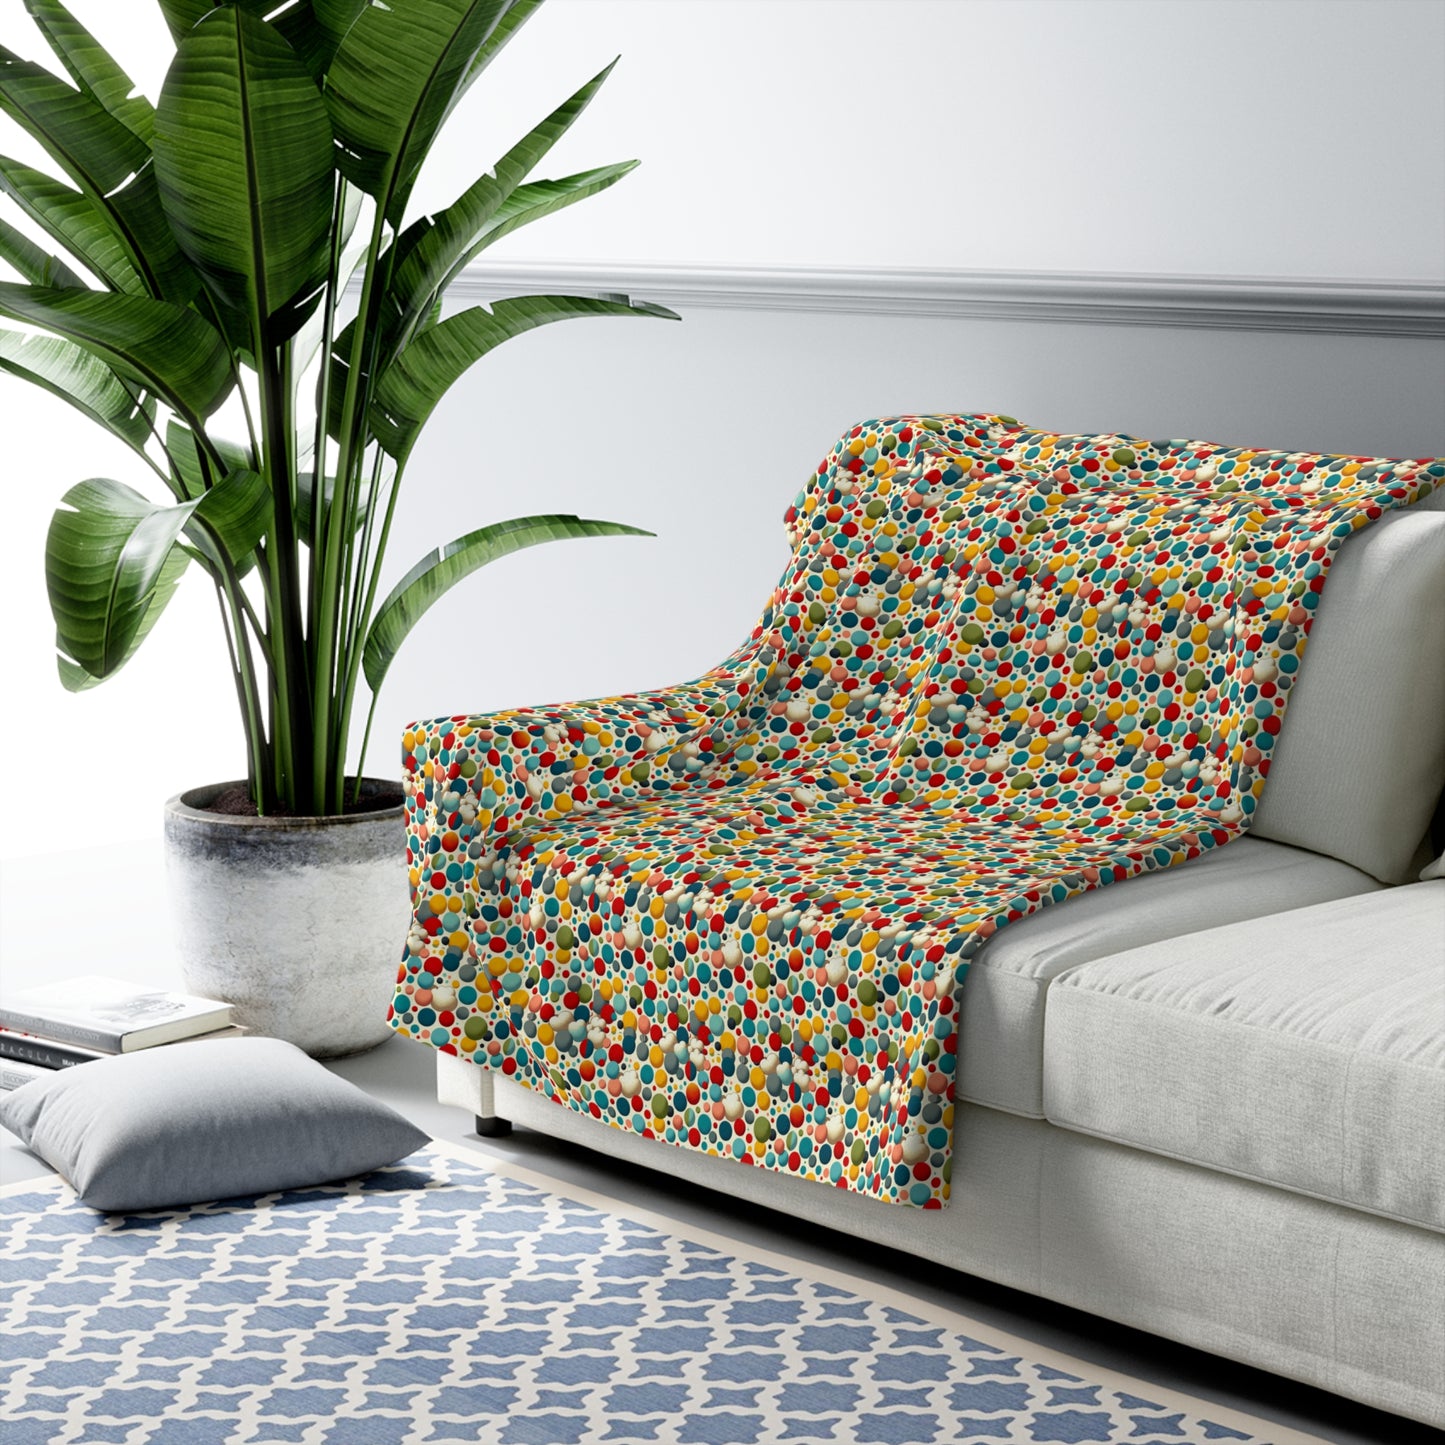 Colorful Whimsy Polka Dot Sherpa Fleece Blanket - Fun and Bright Design